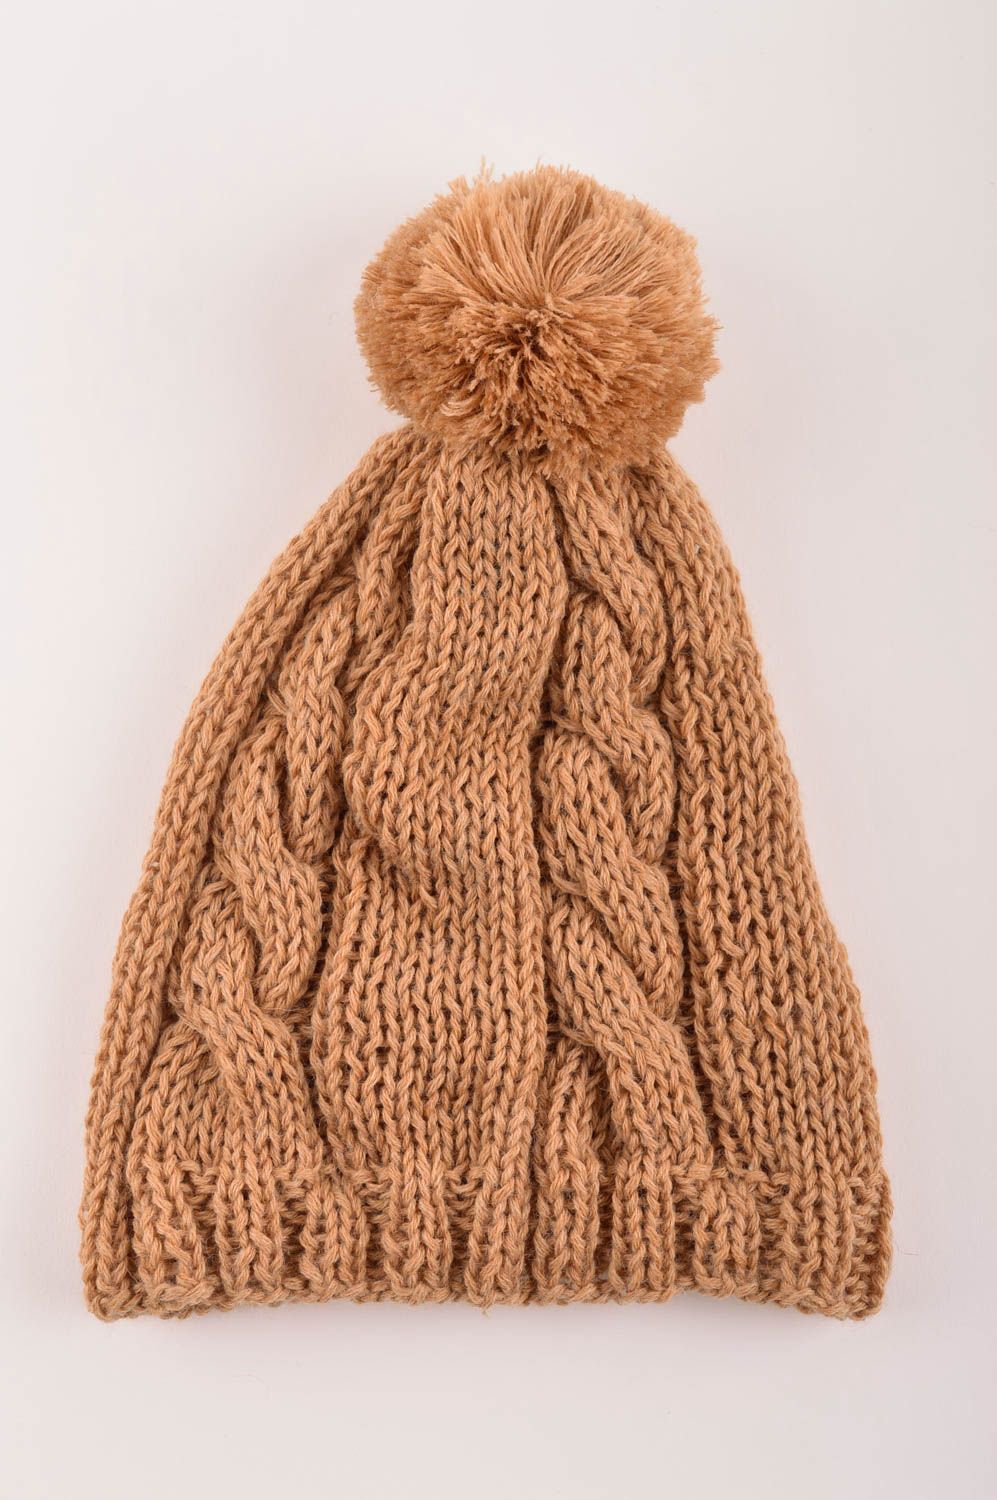 Handmade crocheted hat for children crocheted accessories for children photo 5